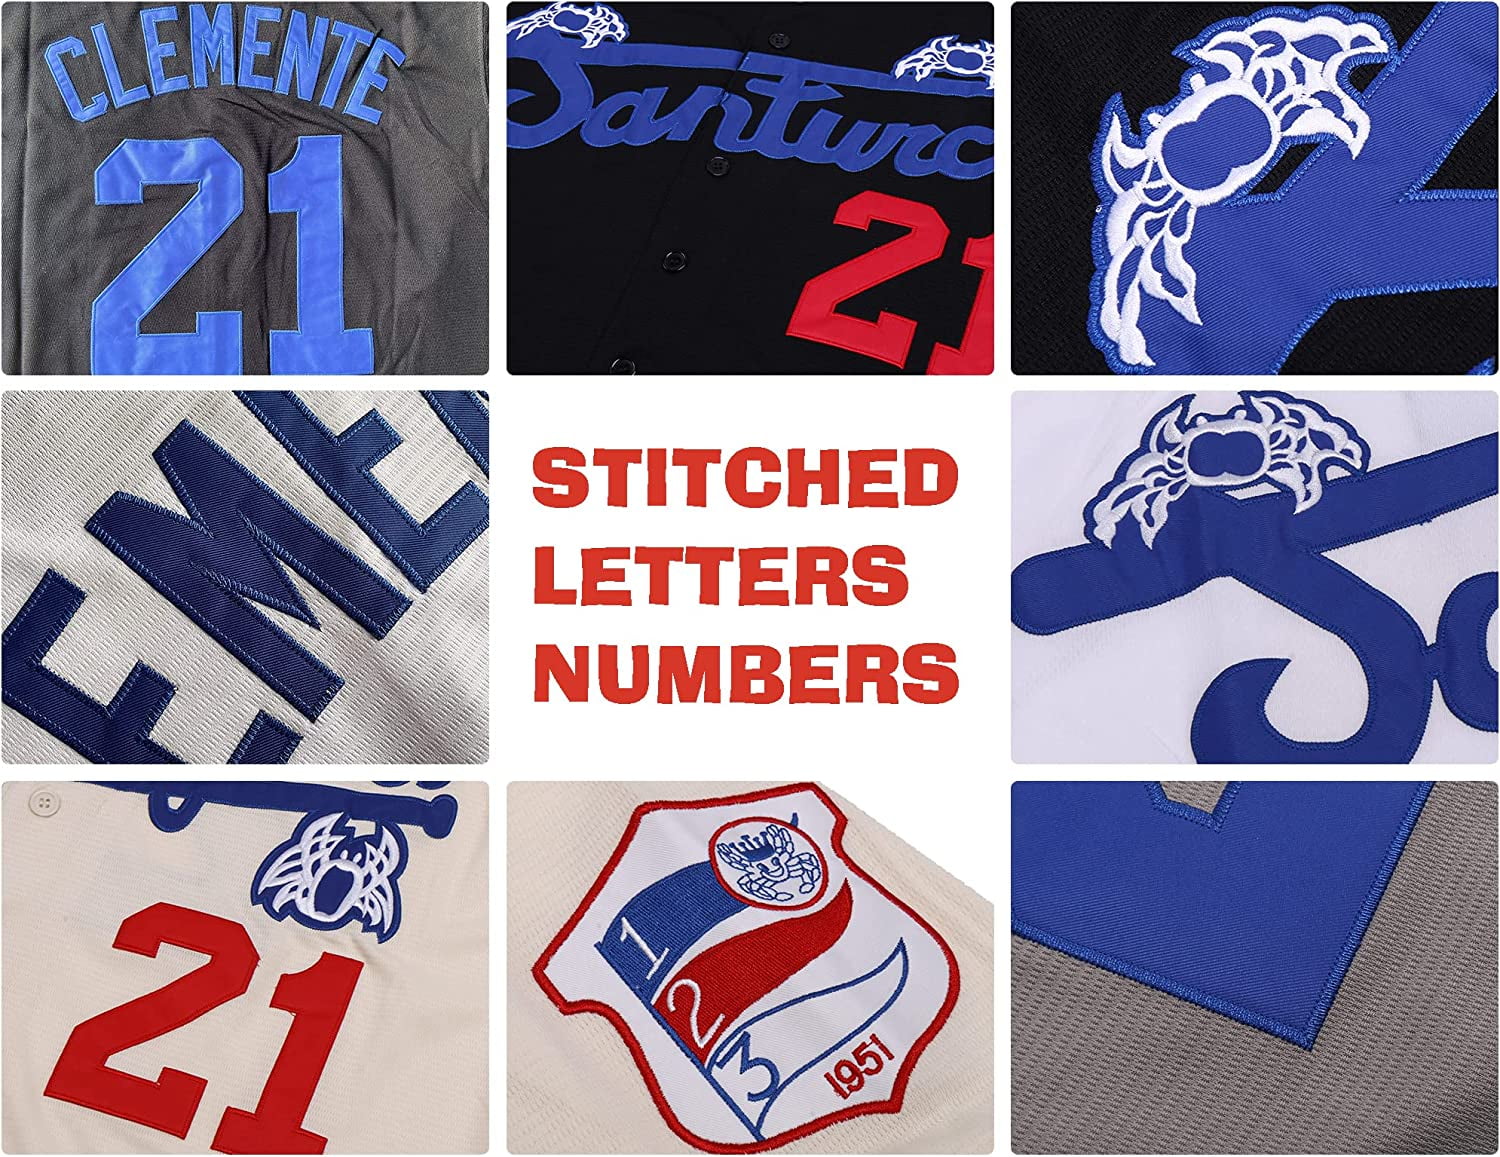 Men's Baseball Jersey Puerto Rico 90s Retro Clemente #21 anturce Crabbers  Stitched Shirt Sweatshirt 